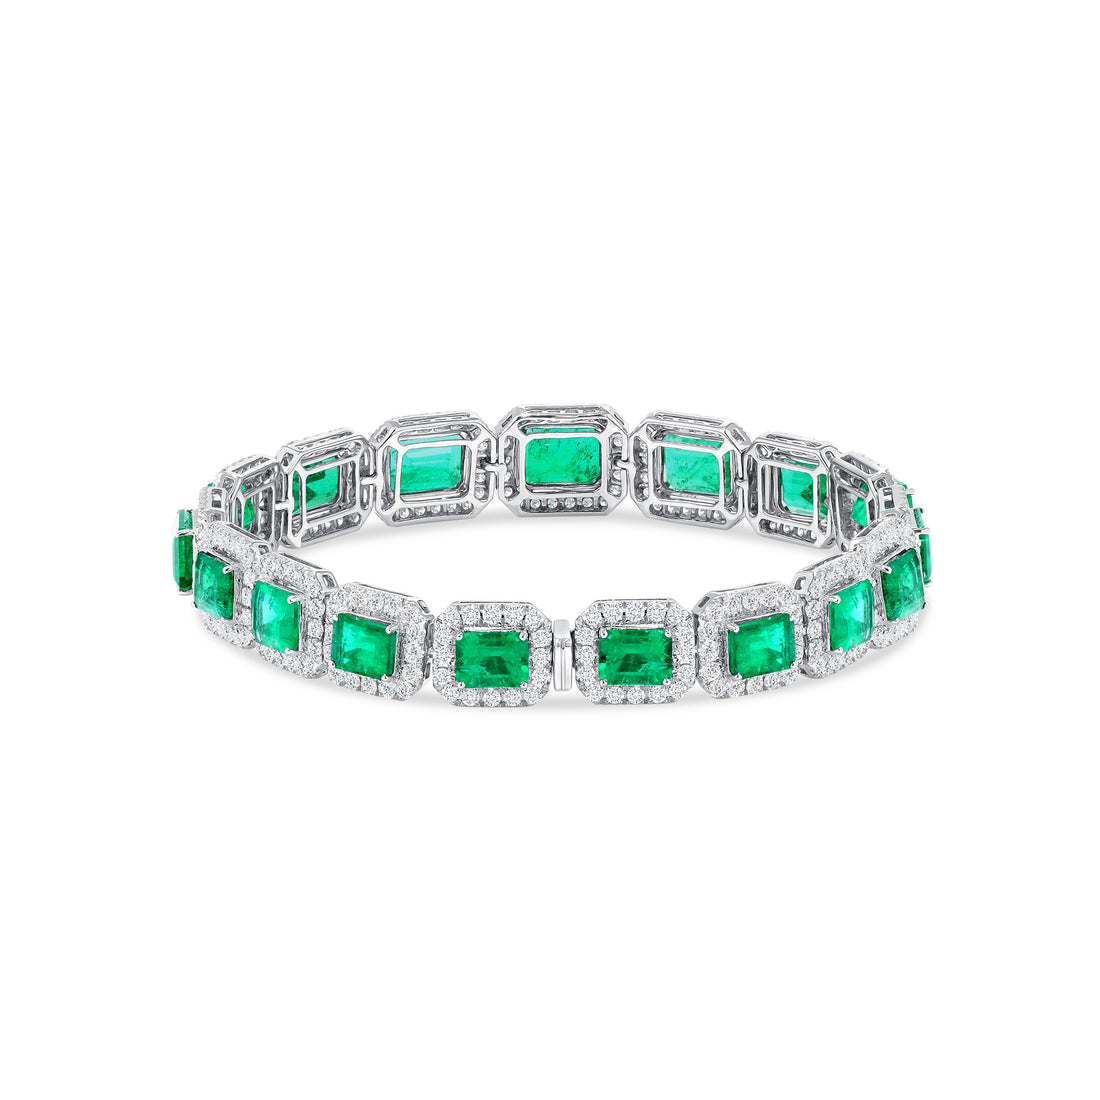 Emerald Cut Emerald and Melee Diamond Bracelet